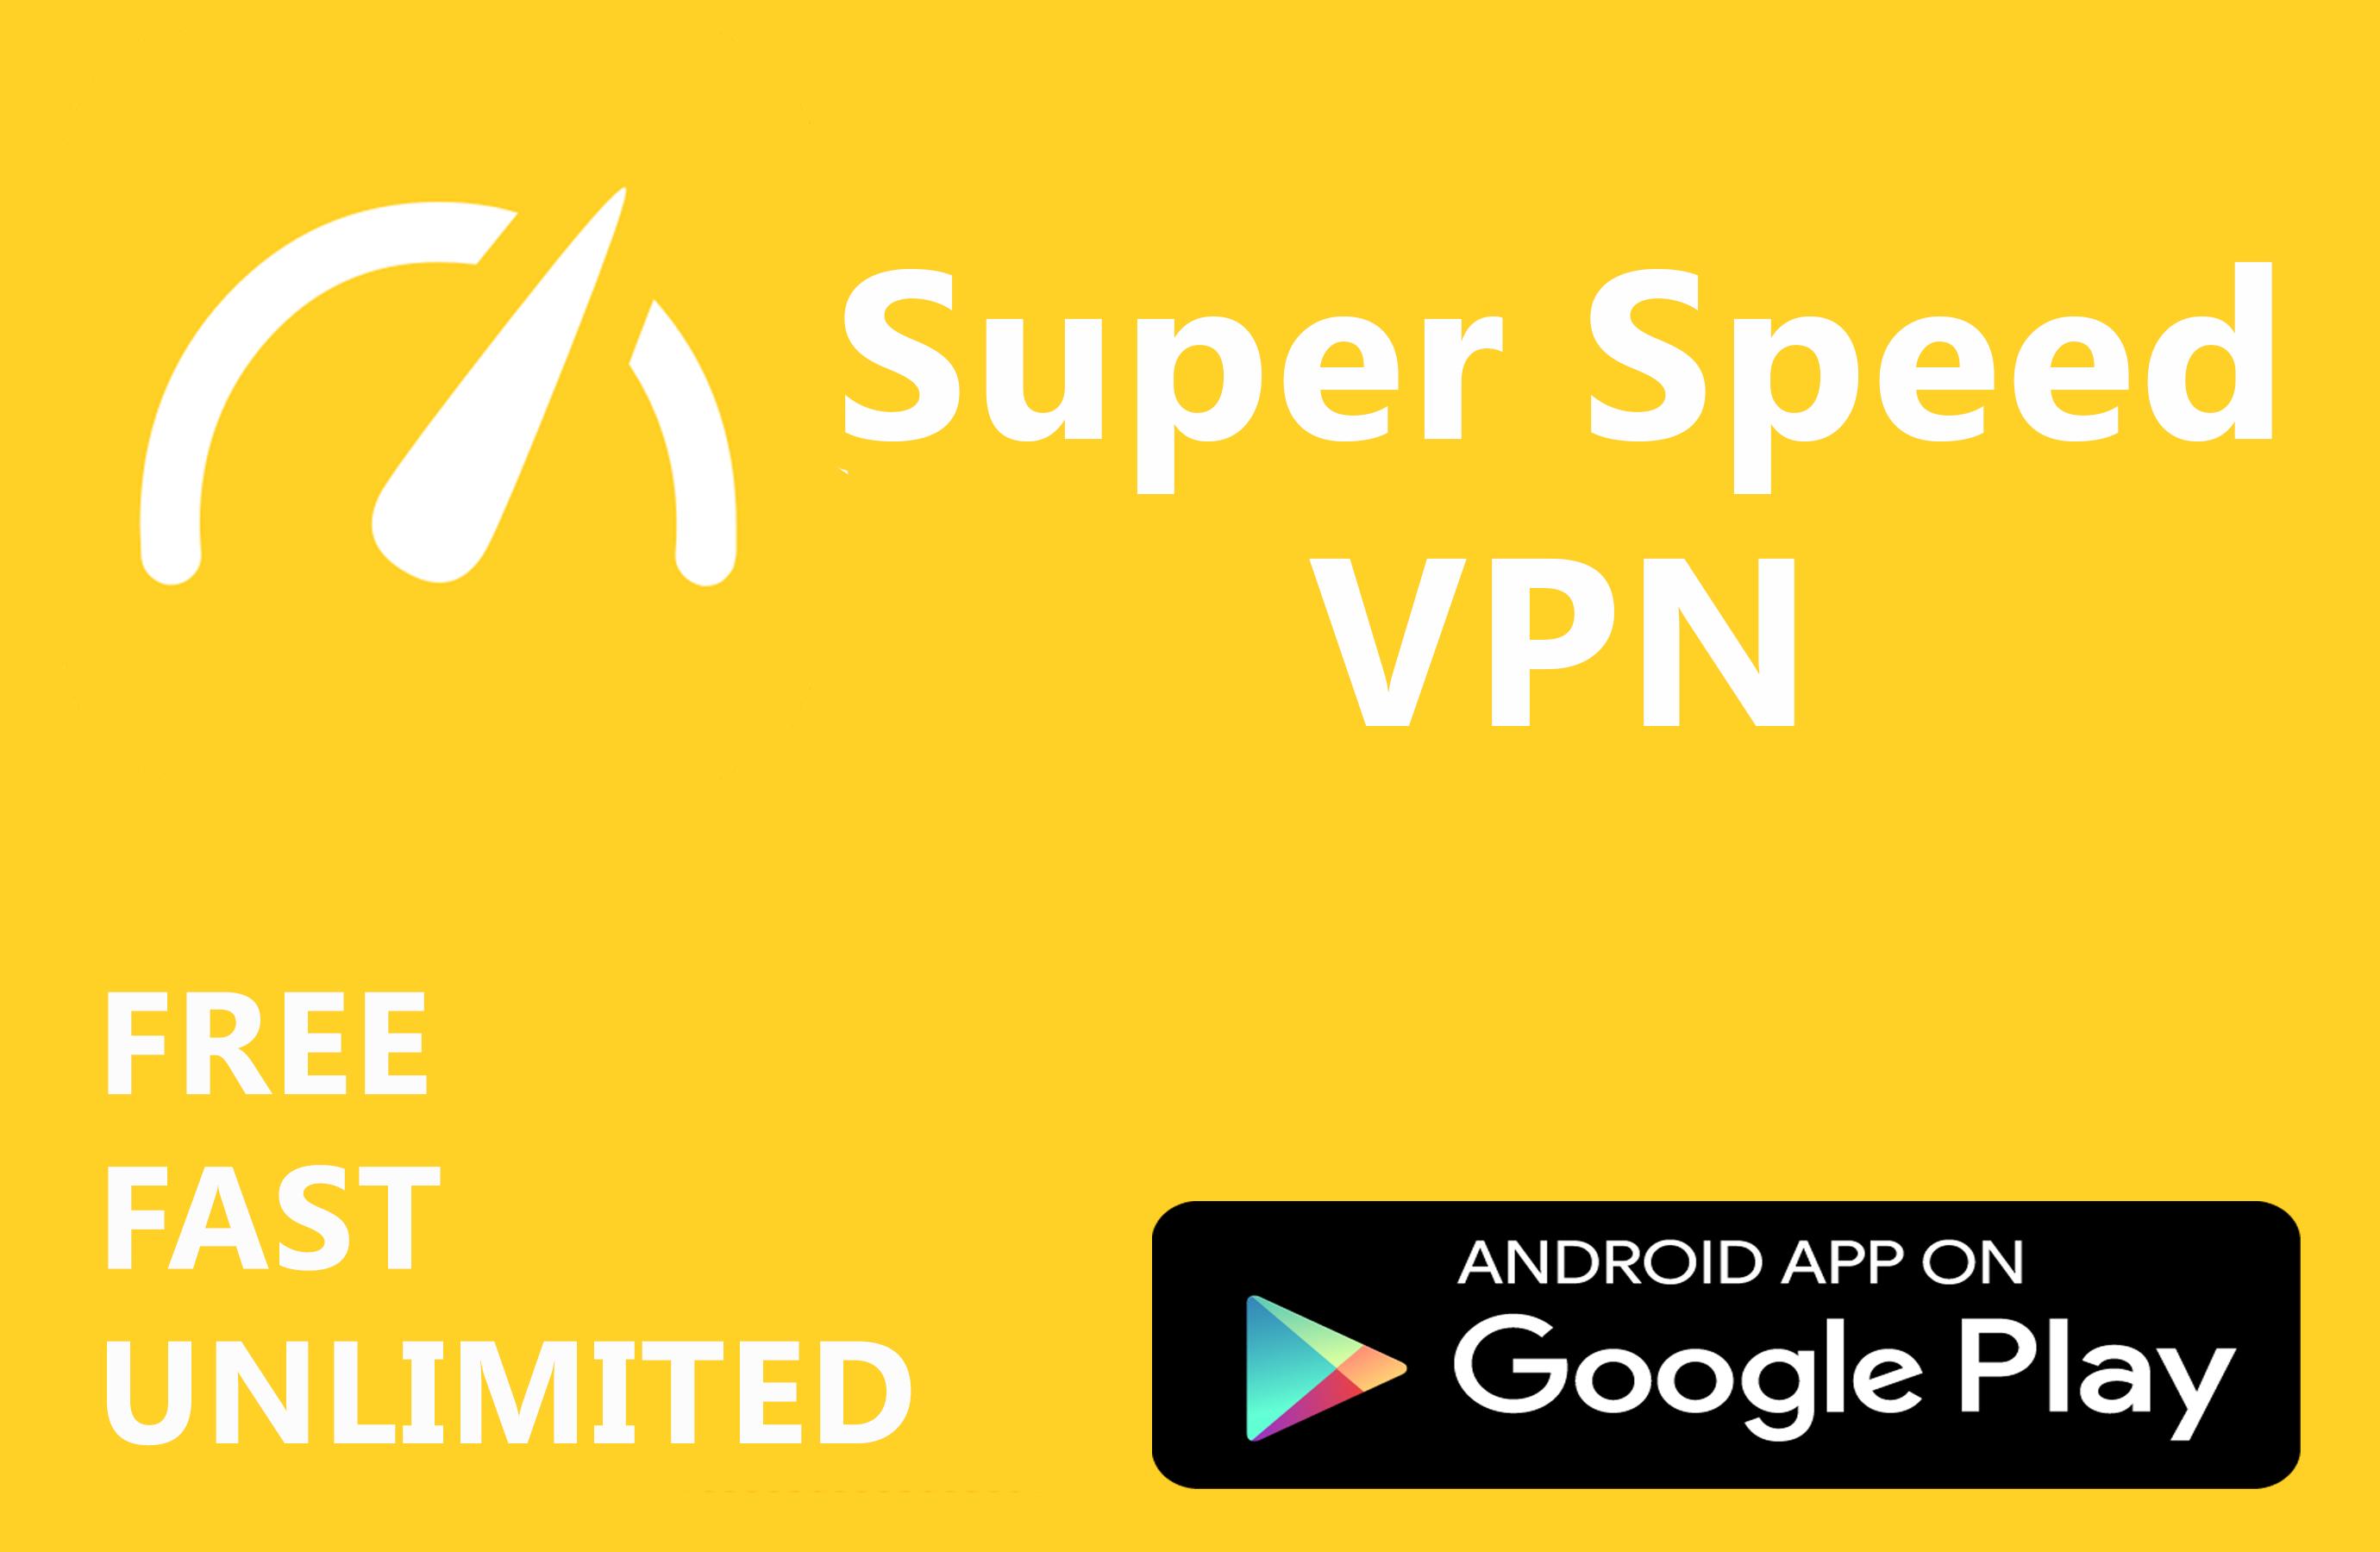 speed vpn apk free download